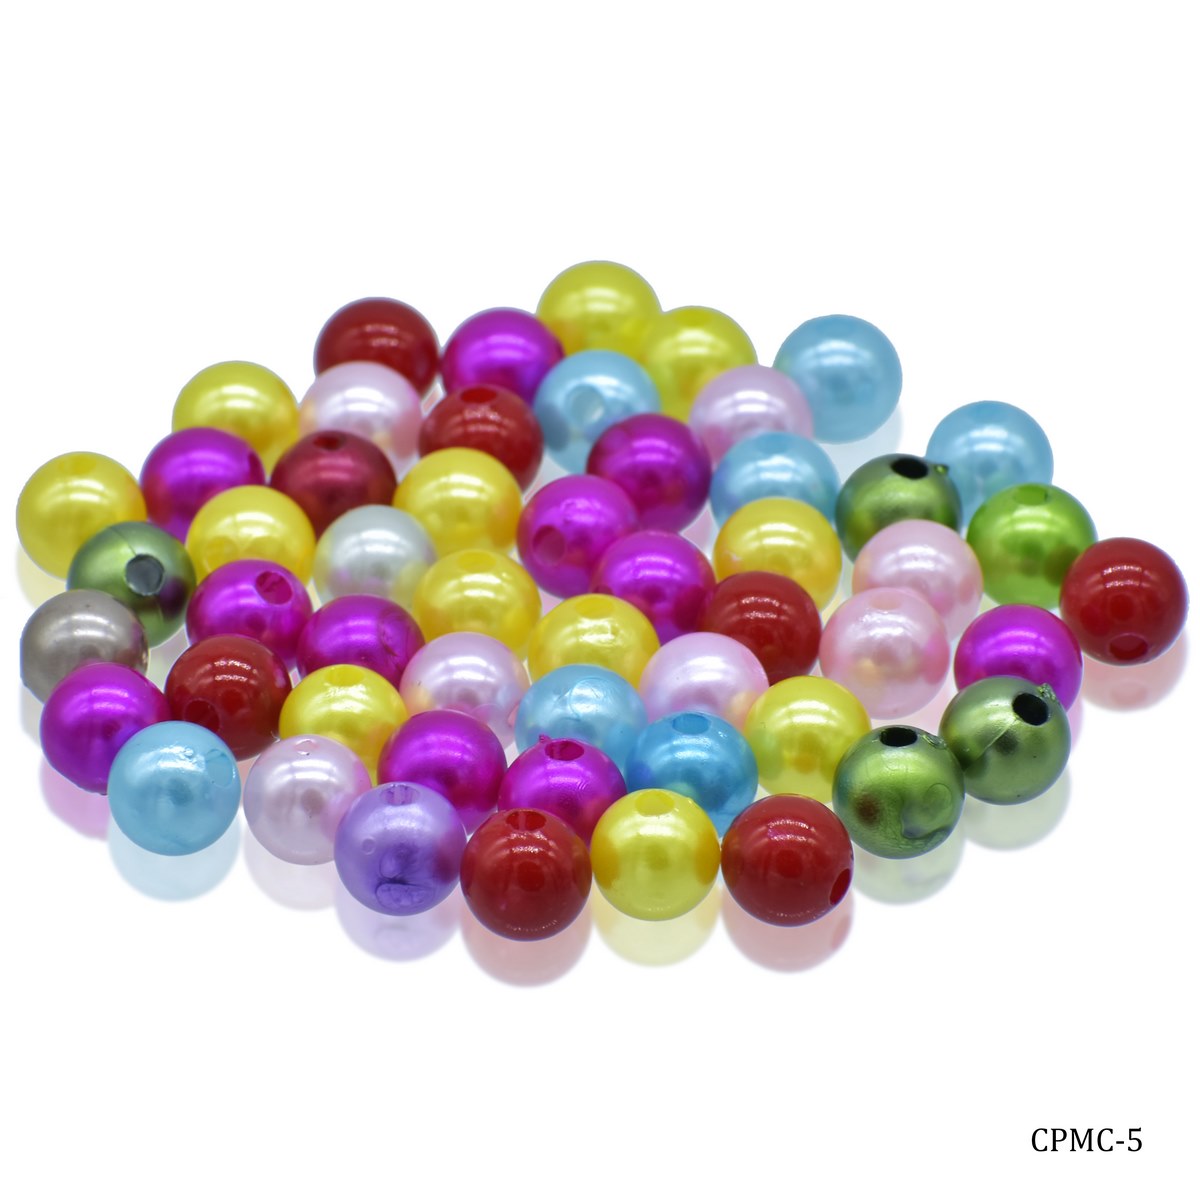 jags-mumbai Beads Jags Craft Beads Multi Colour 25gm 12MM CPMC-5